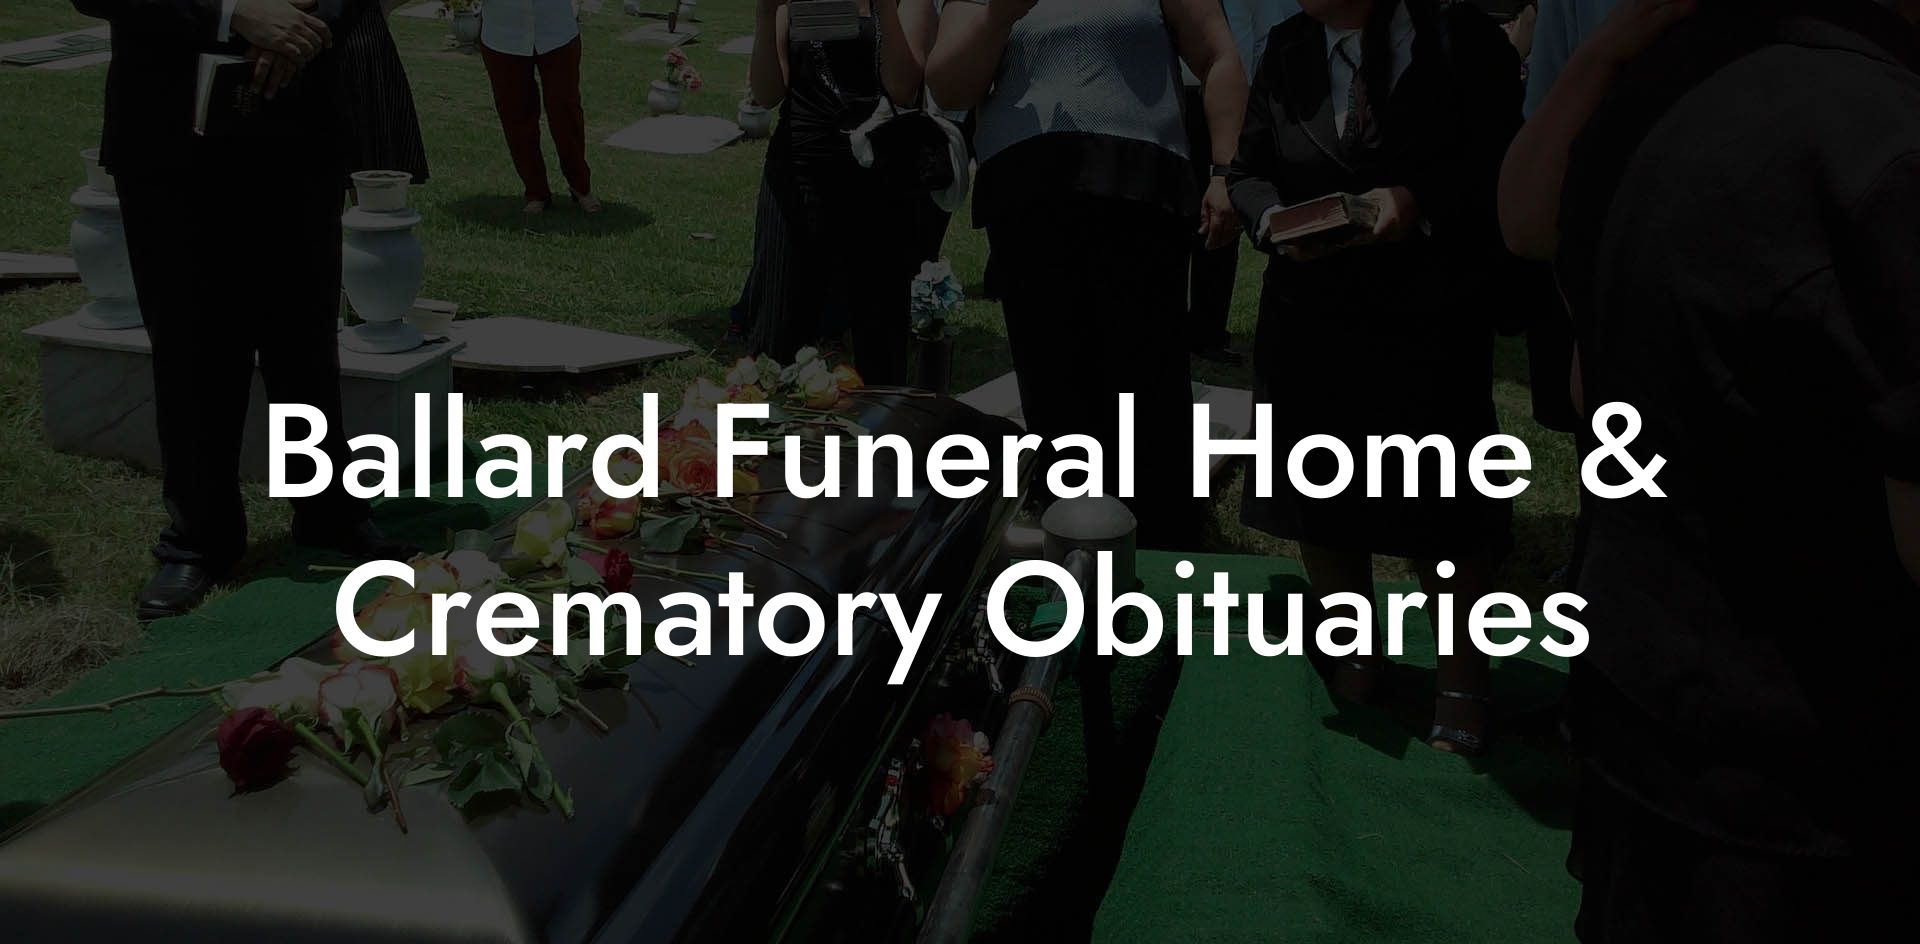 Ballard Funeral Home & Crematory Obituaries